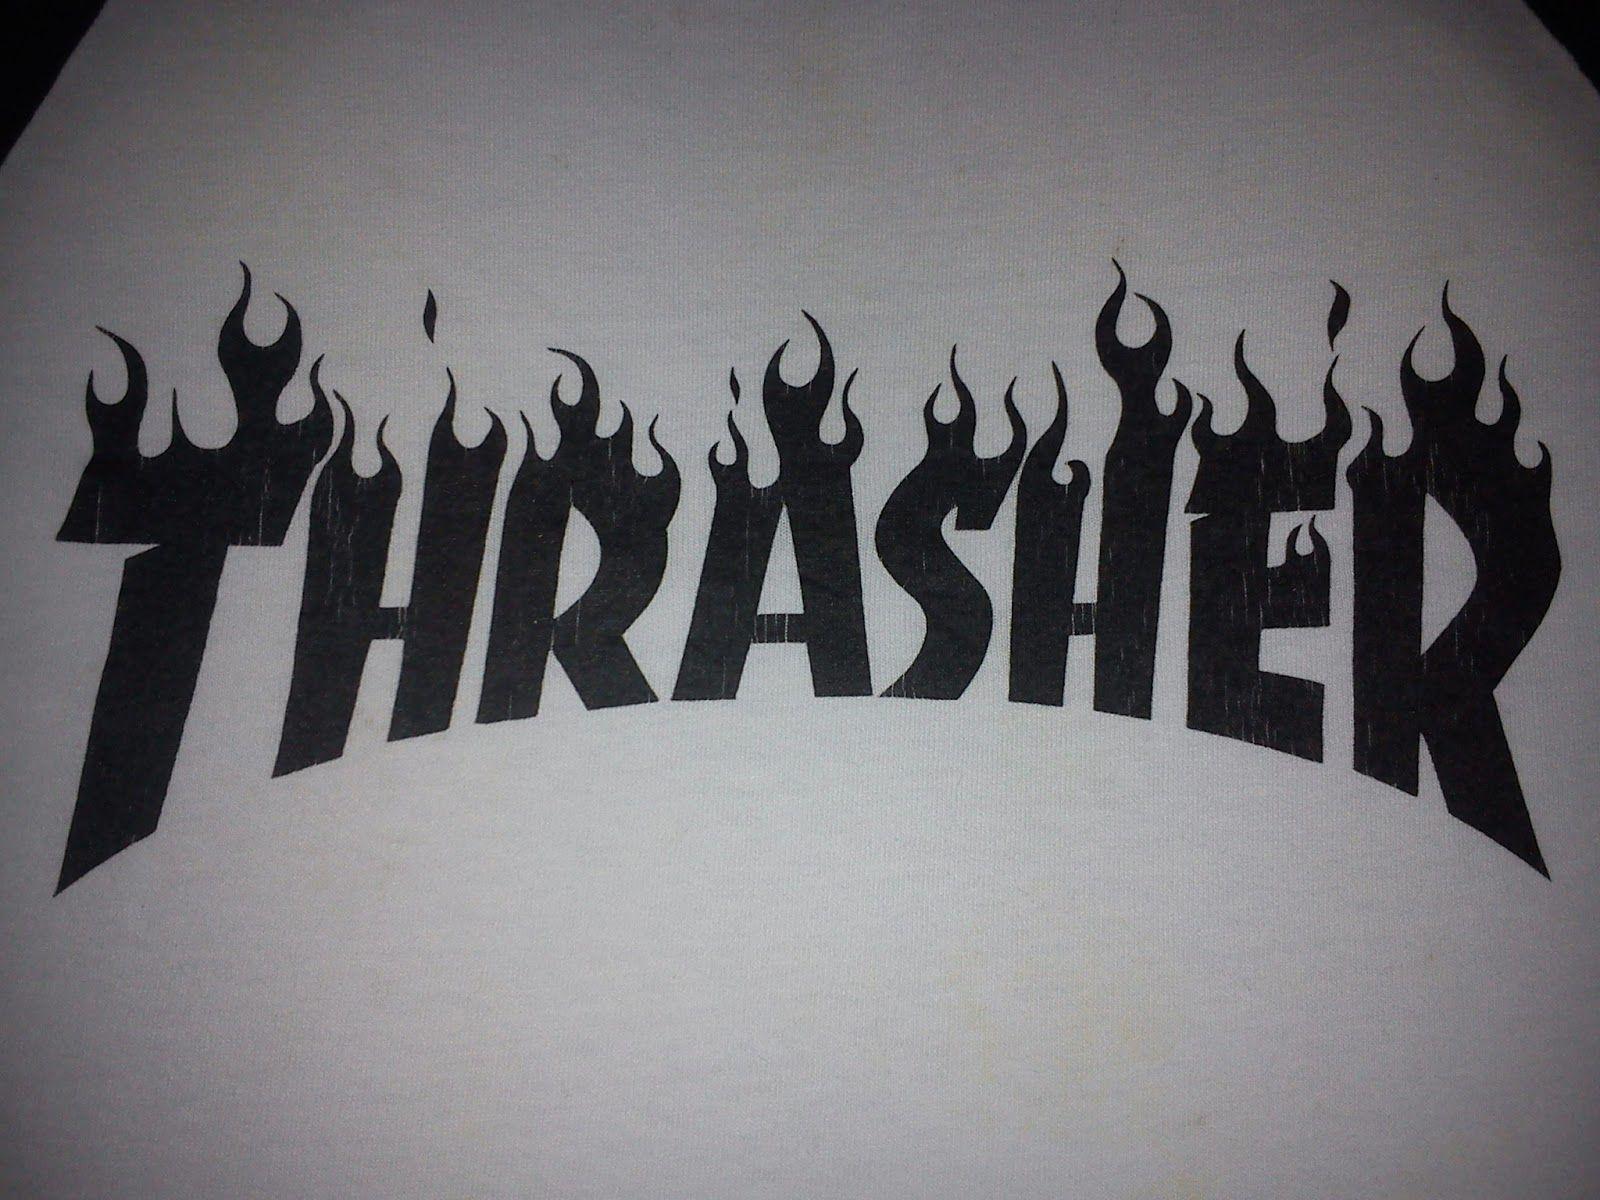 Image For > Thrasher Magazine Logo